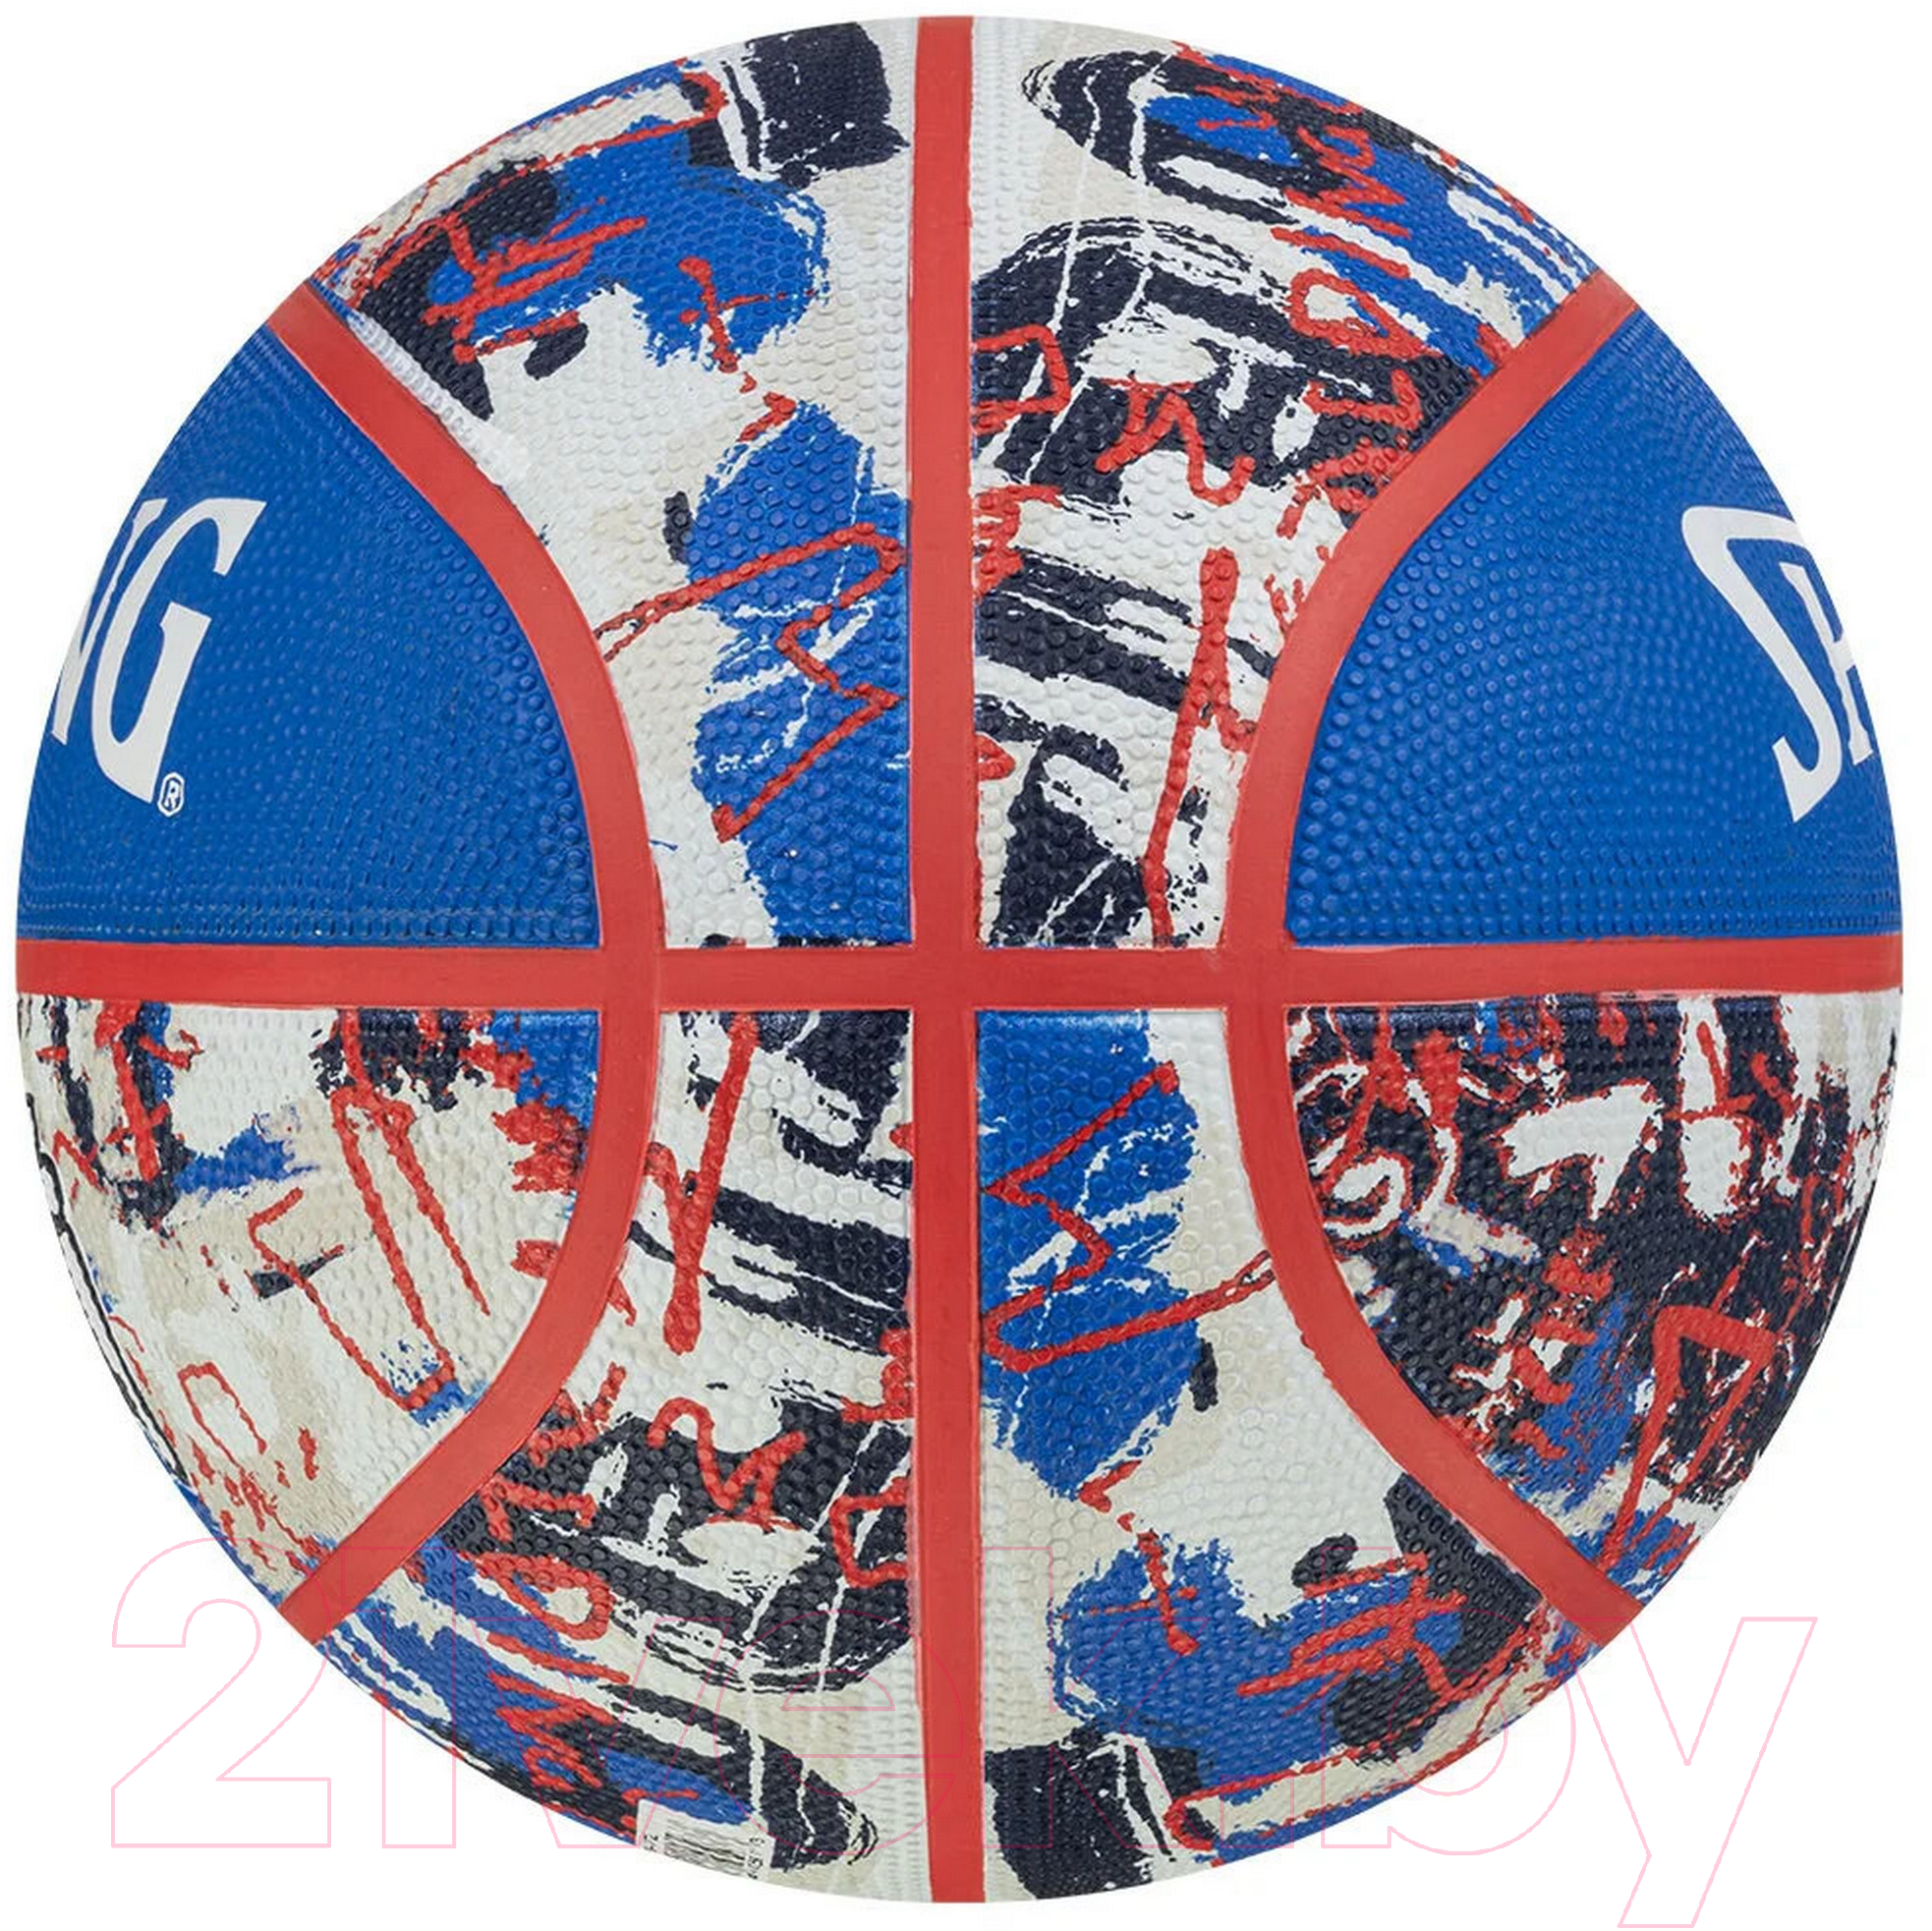 Баскетбольный мяч Spalding Graffiti 84377z